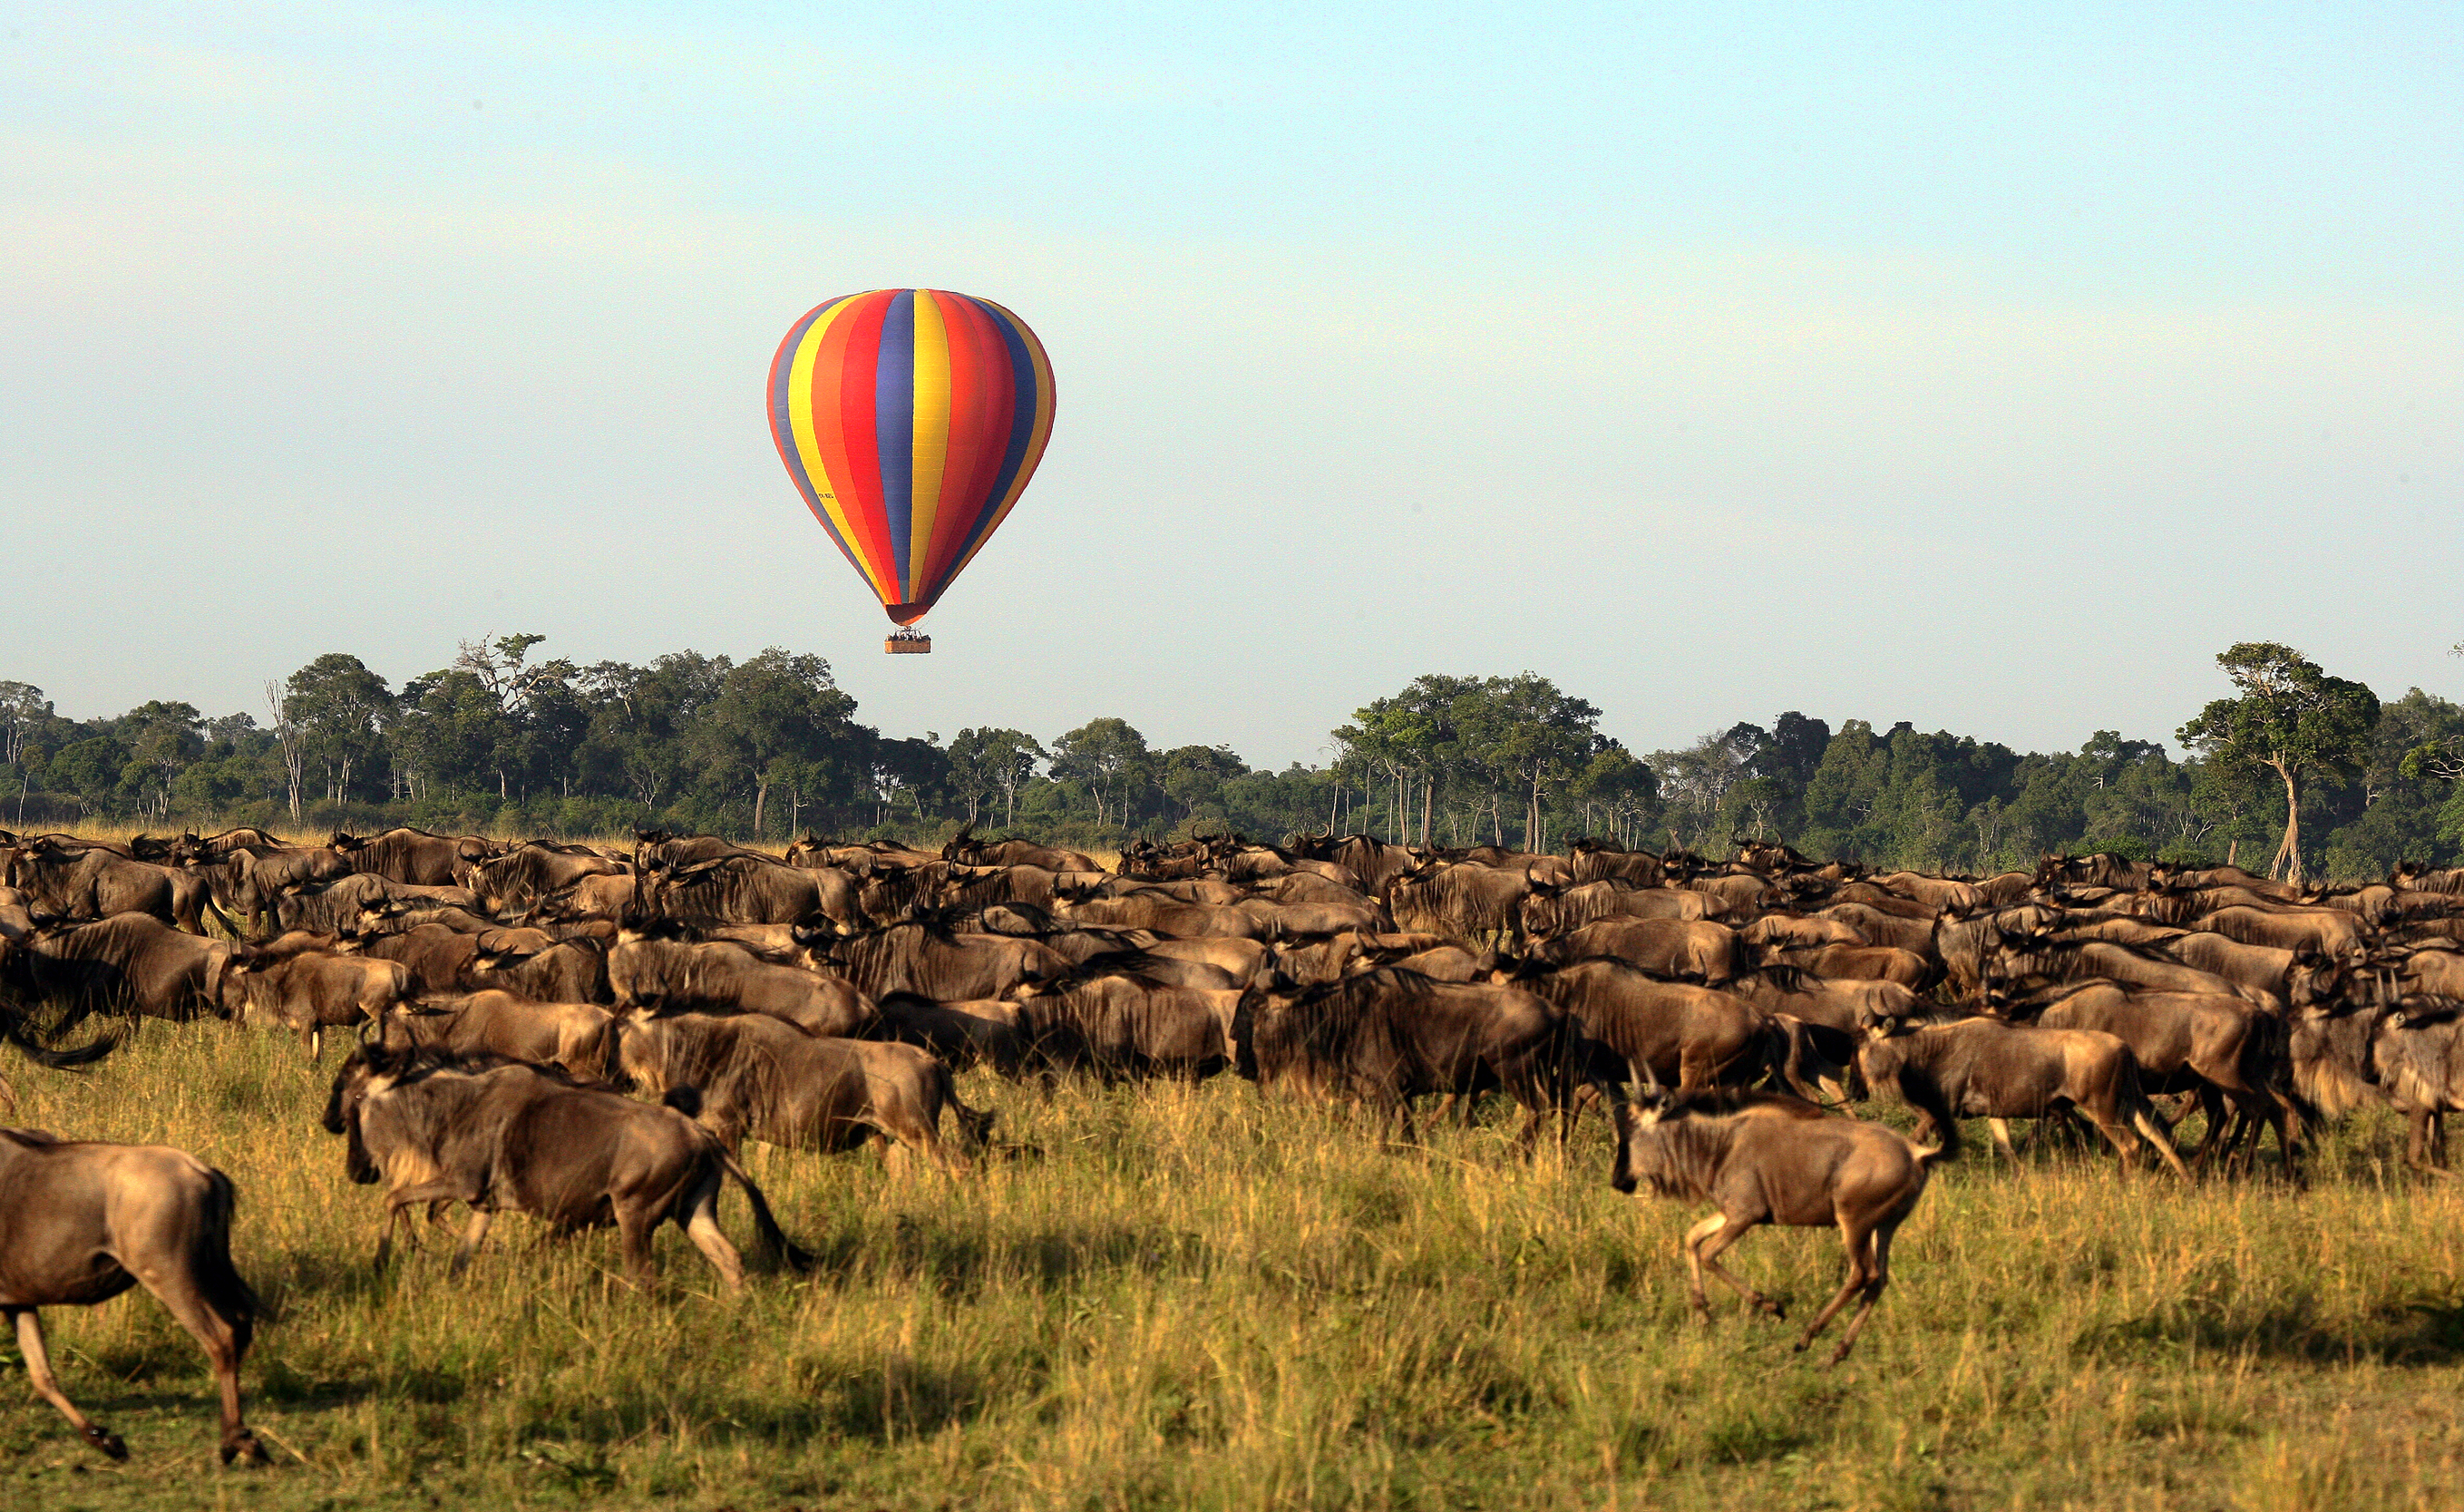 Hot air balloon over Kenya's Maasai Mara